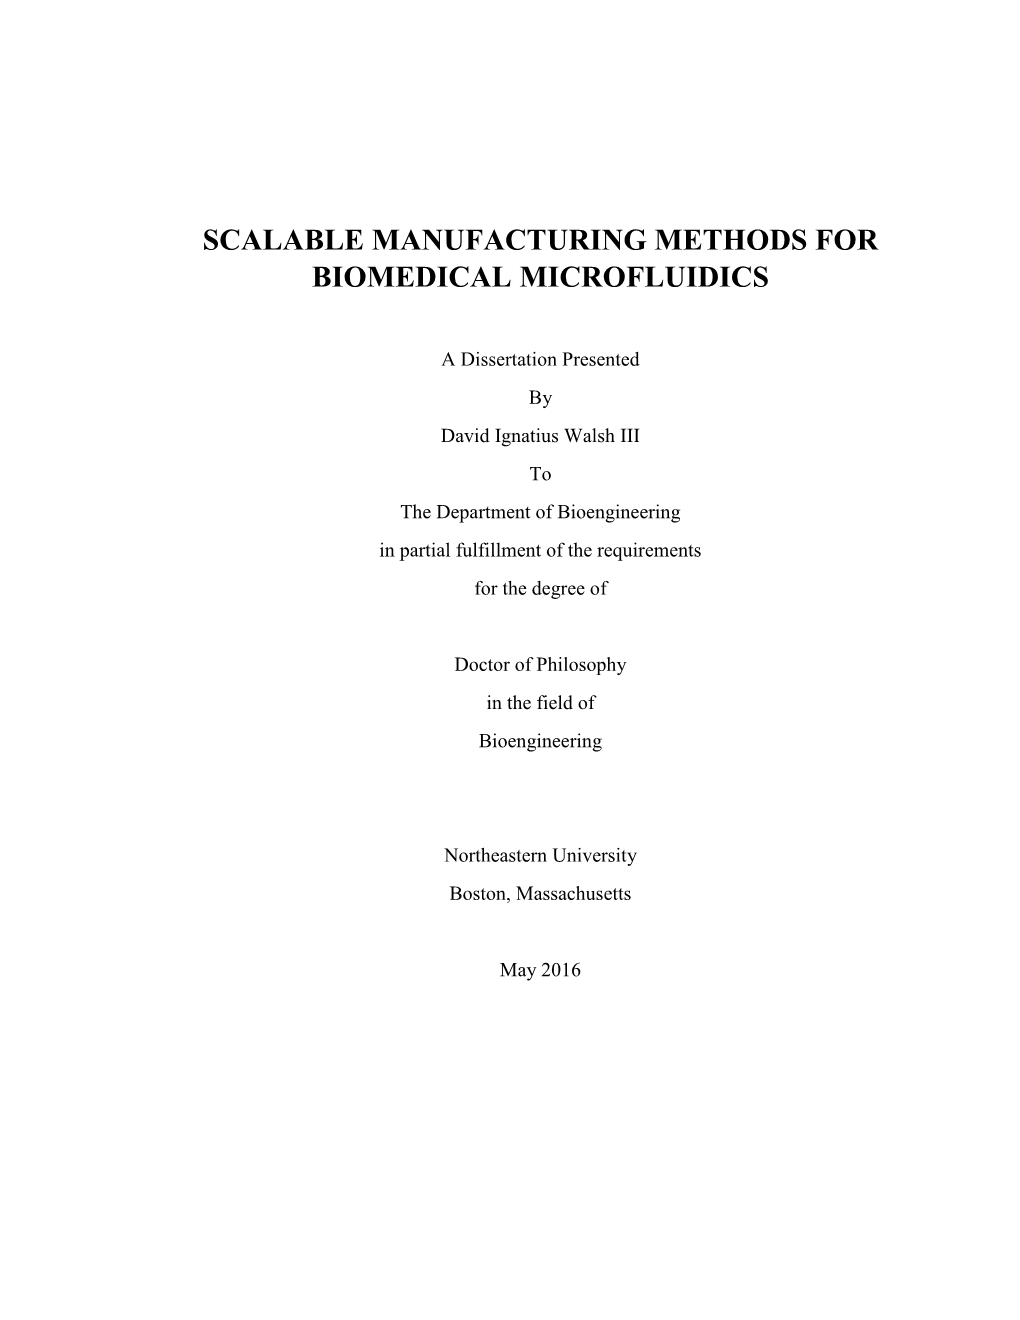 Scalable Manufacturing Methods for Biomedical Microfluidics